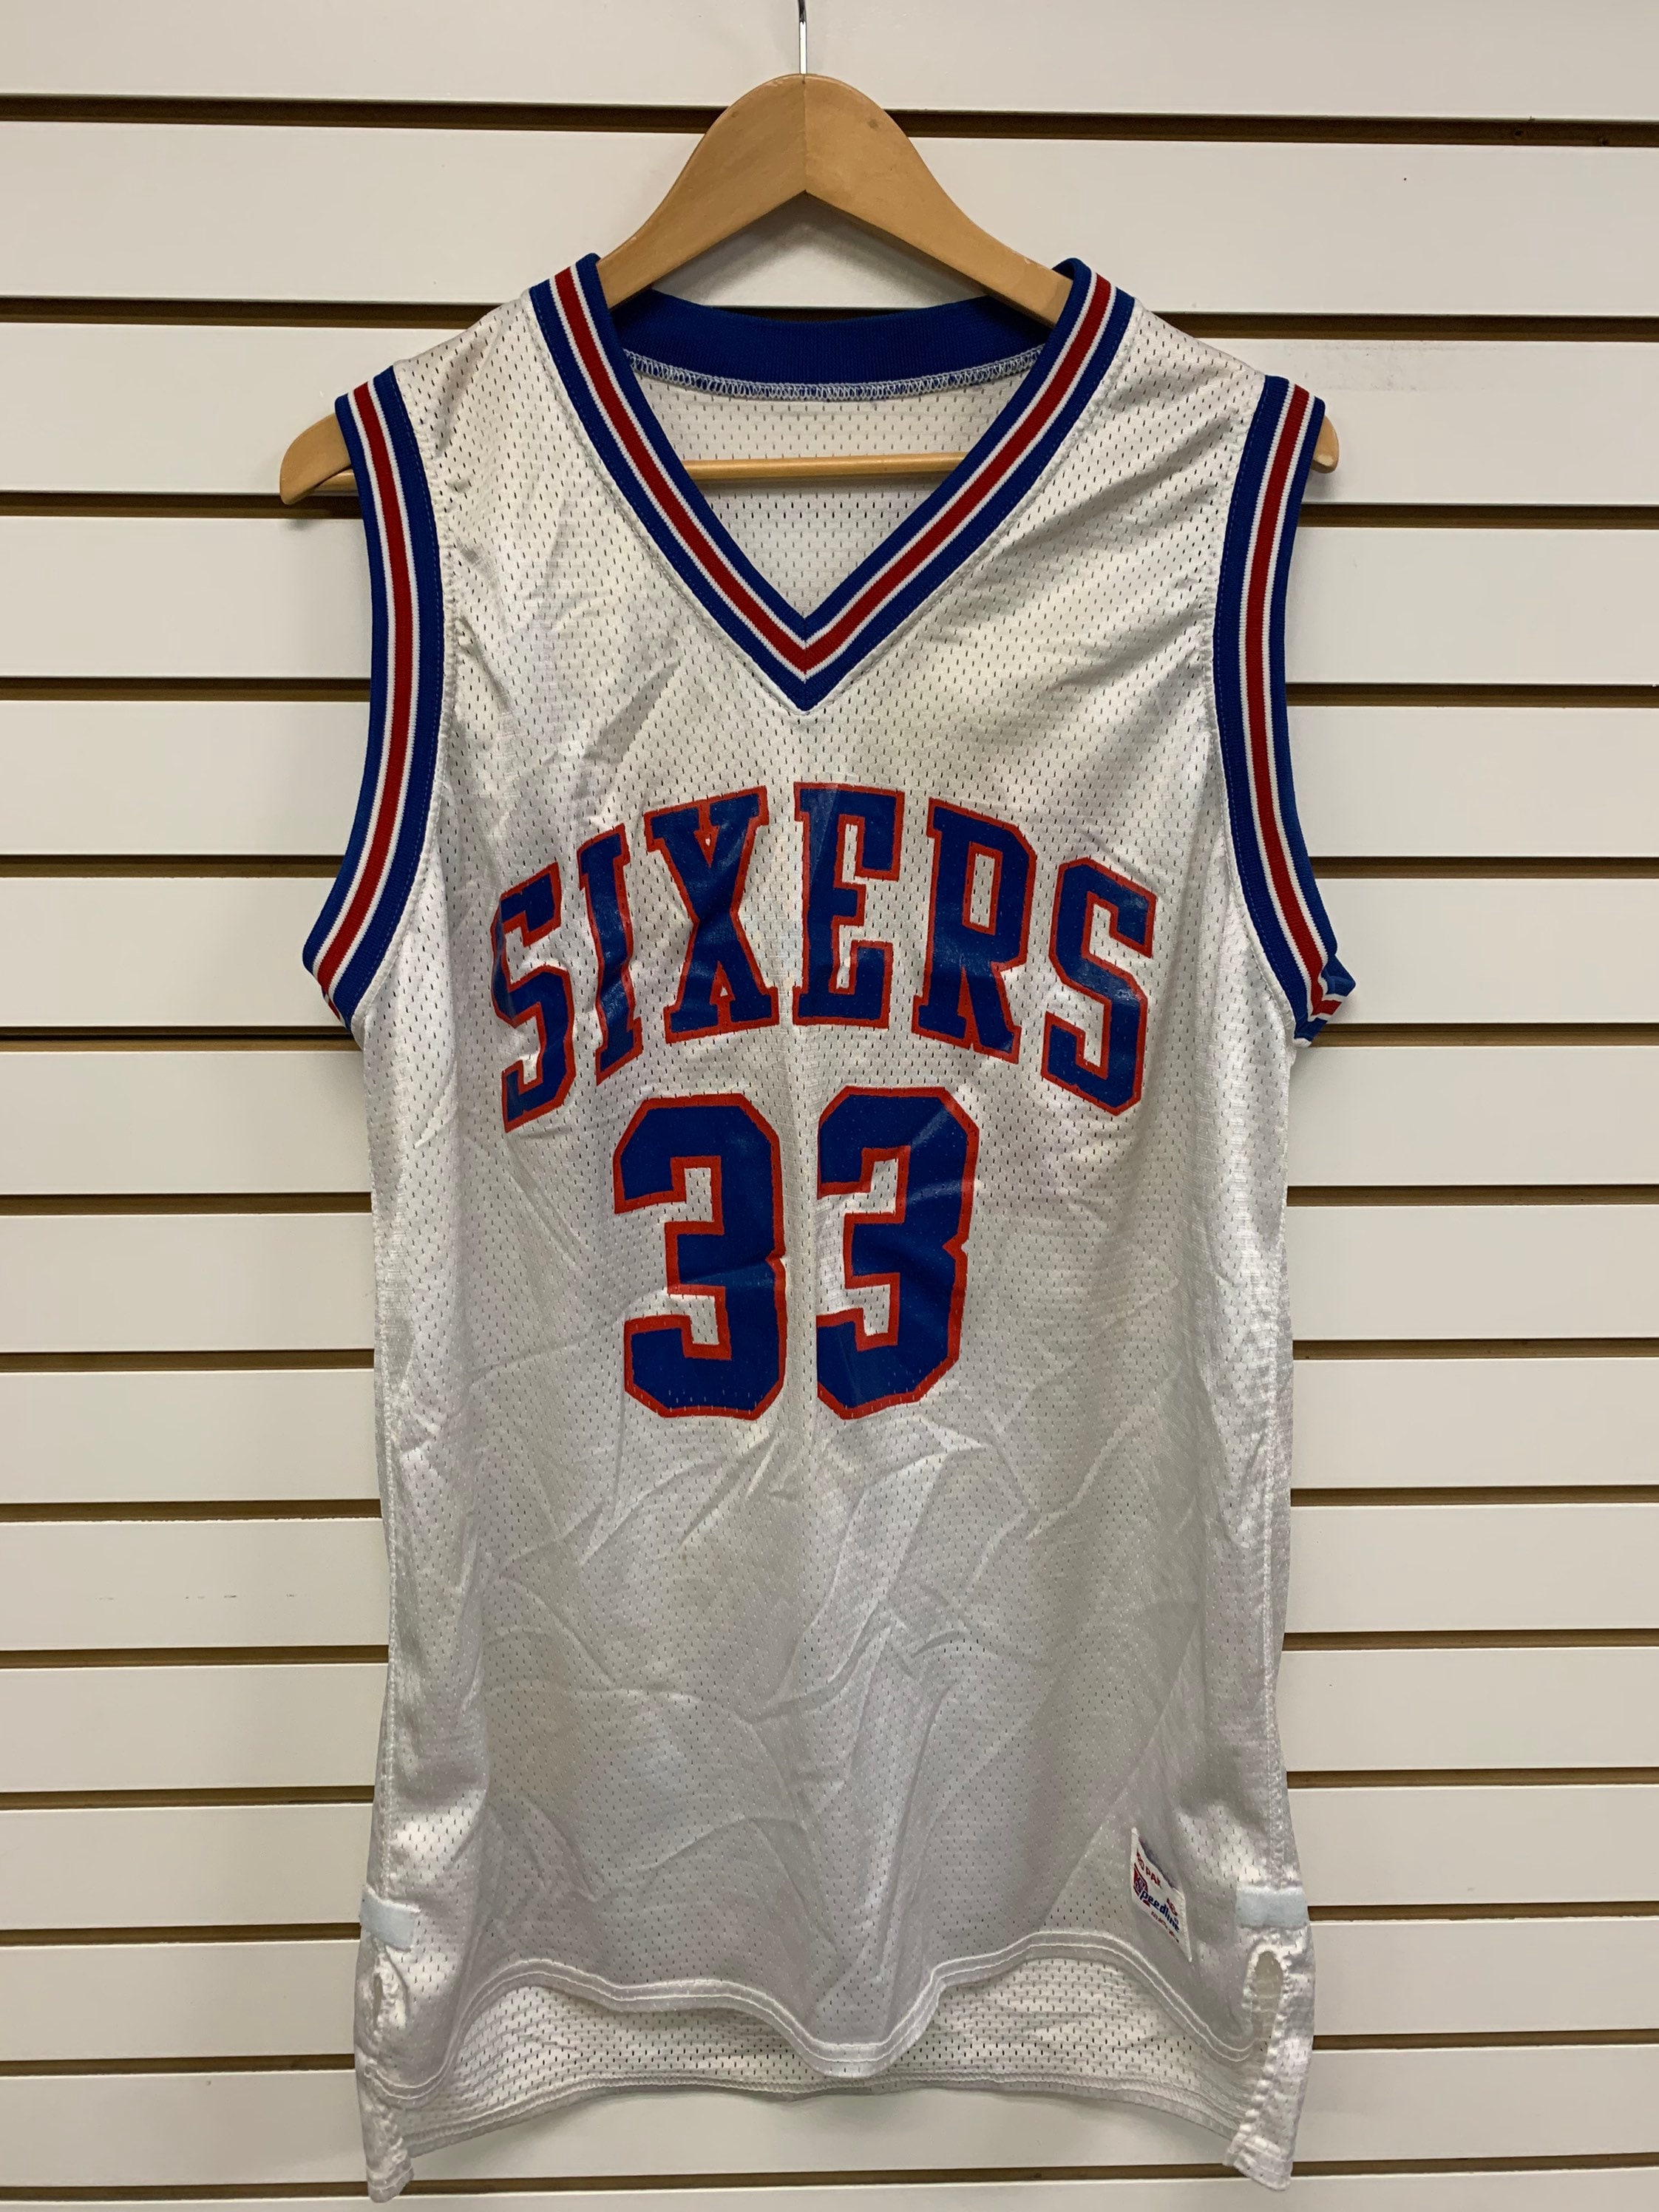 NEW - Mens Stitched Nike NBA Jersey - Joel Embiid - 76ers - M-XL